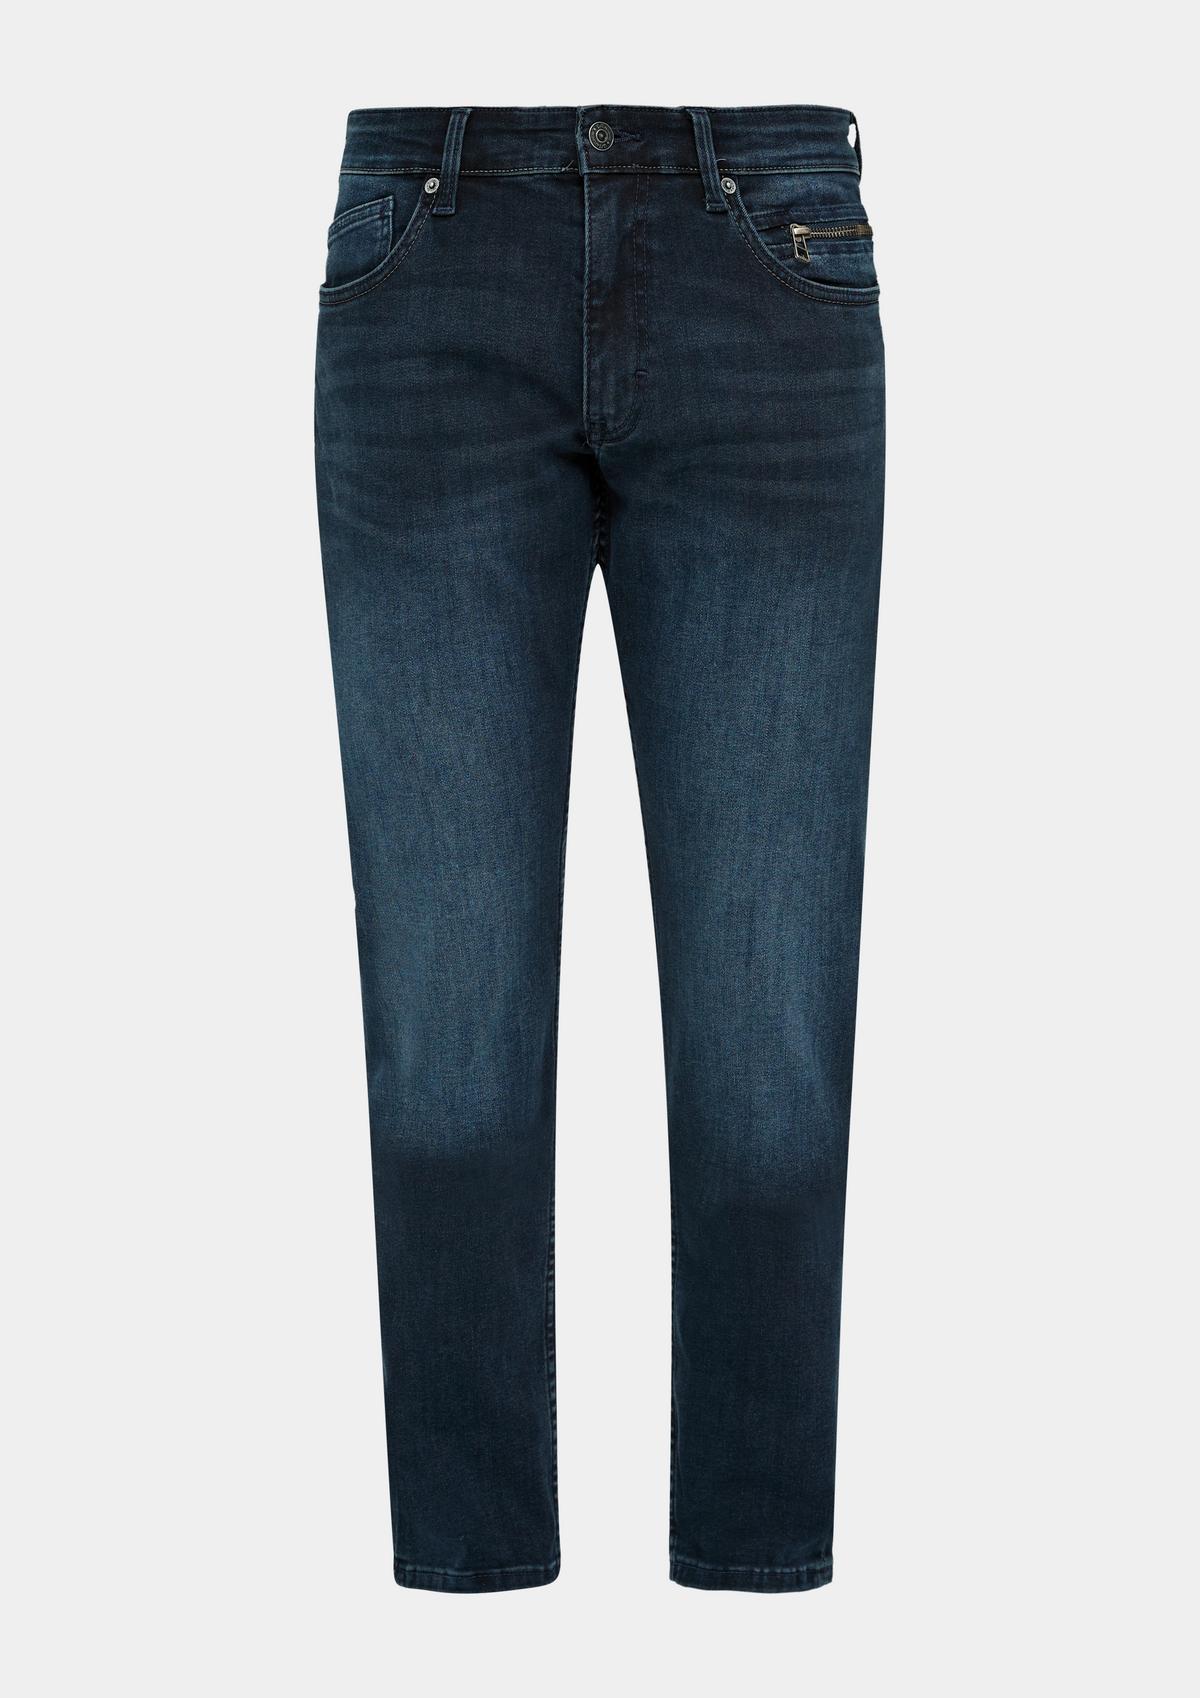 Rick jeans / slim fit / mid rise / slim leg - blue